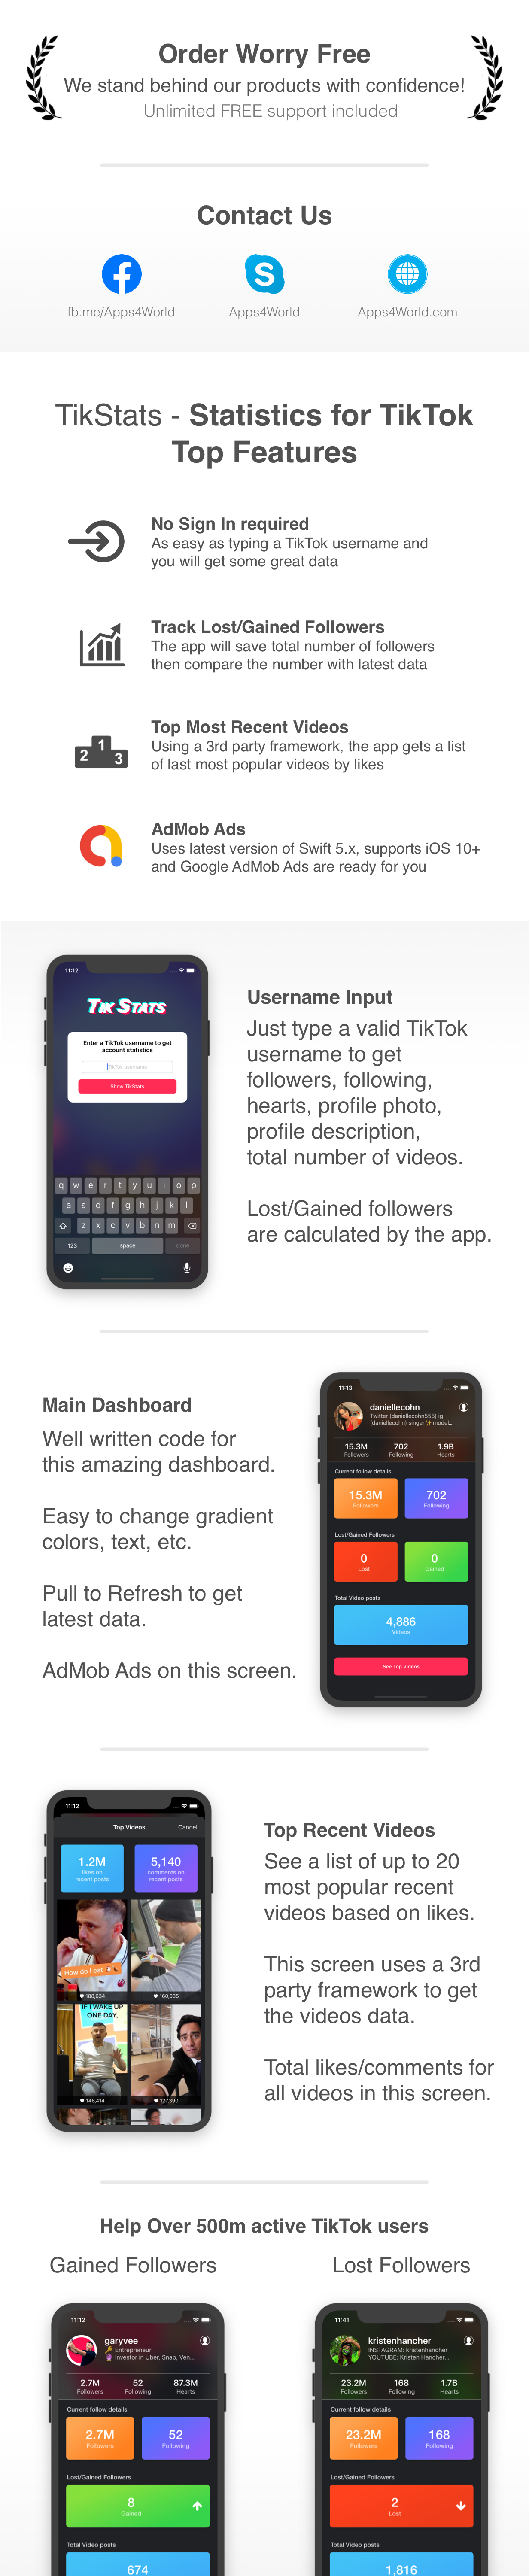 TikStats - iOS app for TikTok - Track followers, Top Videos - 1